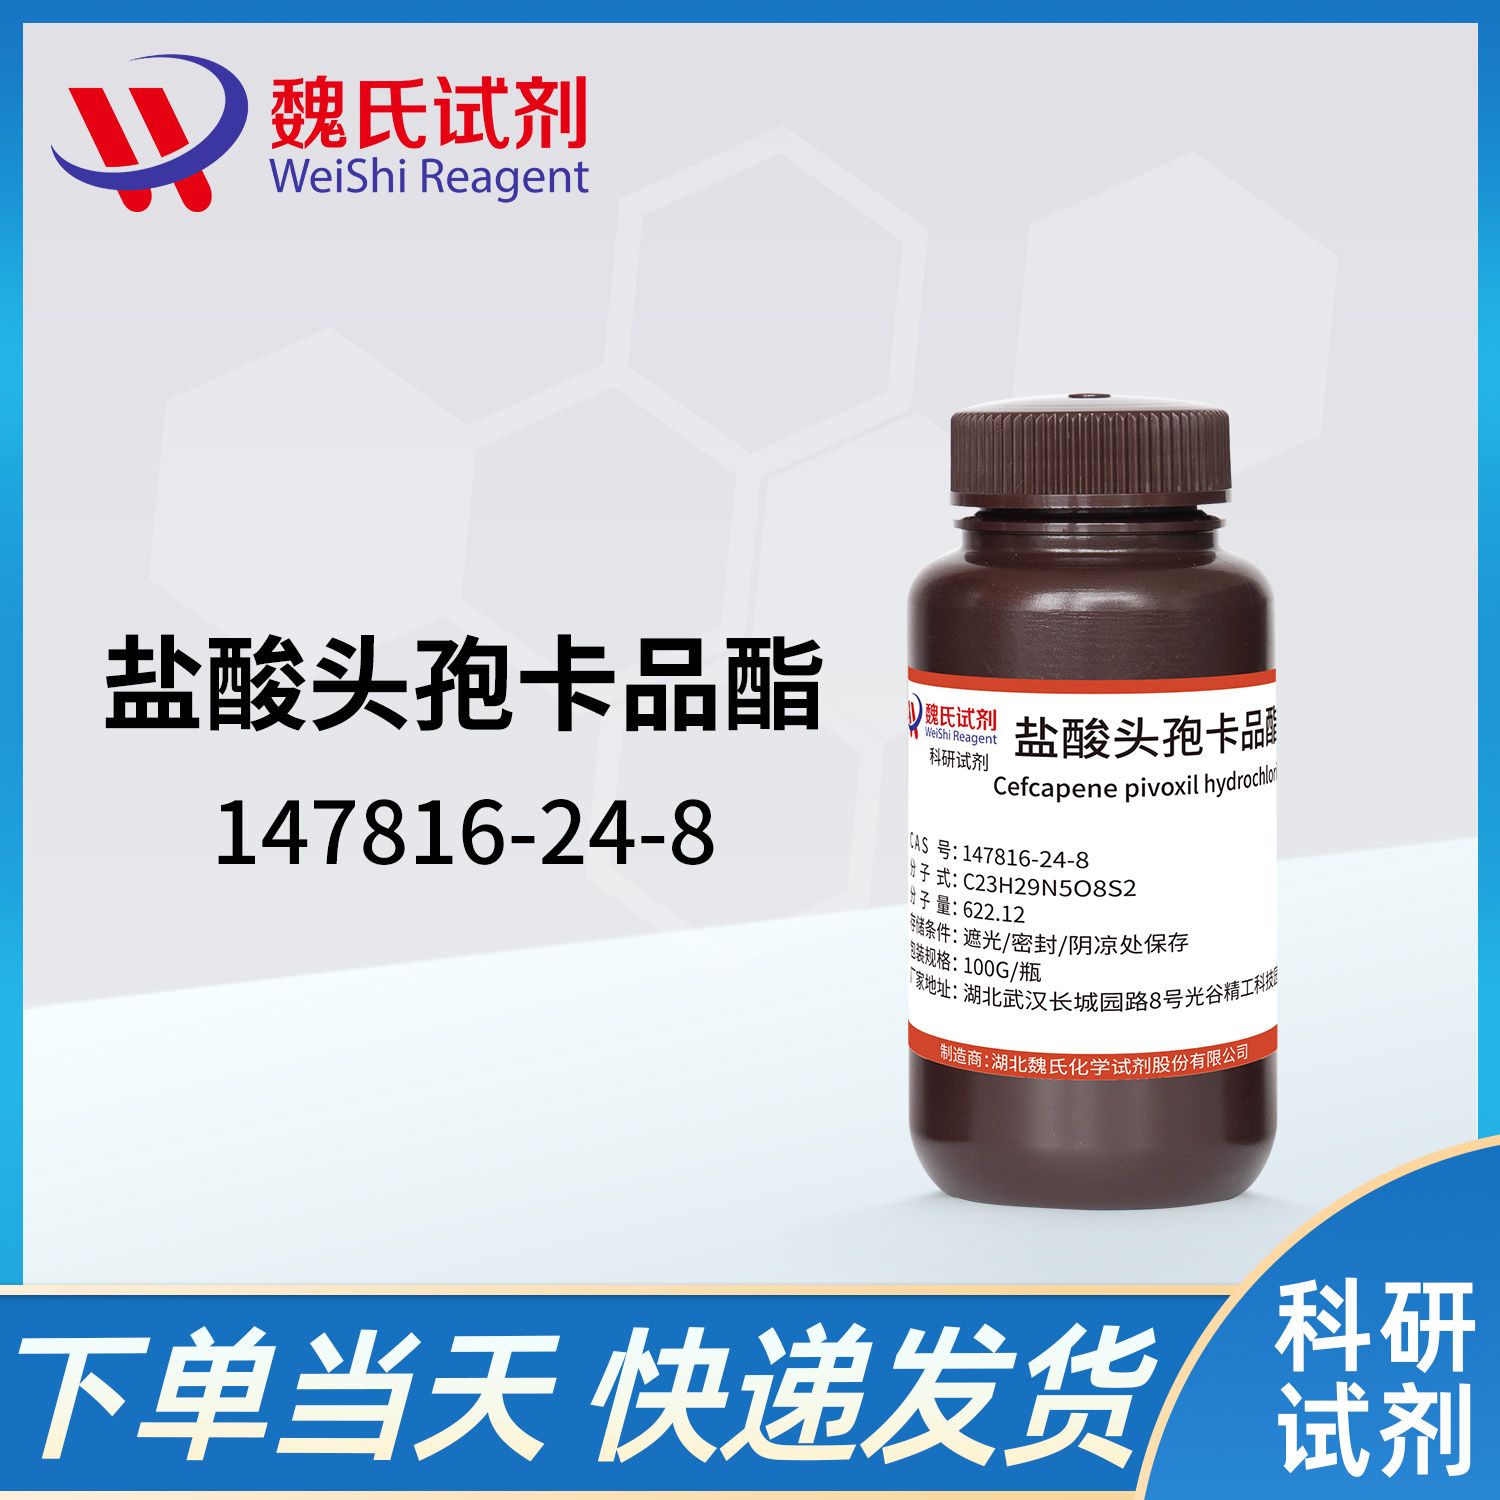 147816-24-8 /盐酸头孢卡品酯/Cefcapene pivoxil hydrochloride